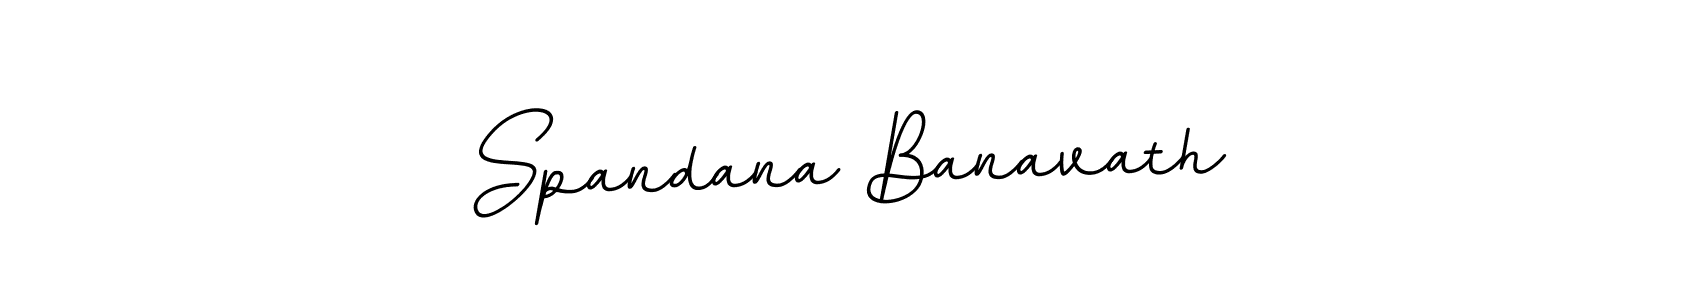 How to Draw Spandana Banavath signature style? BallpointsItalic-DORy9 is a latest design signature styles for name Spandana Banavath. Spandana Banavath signature style 11 images and pictures png